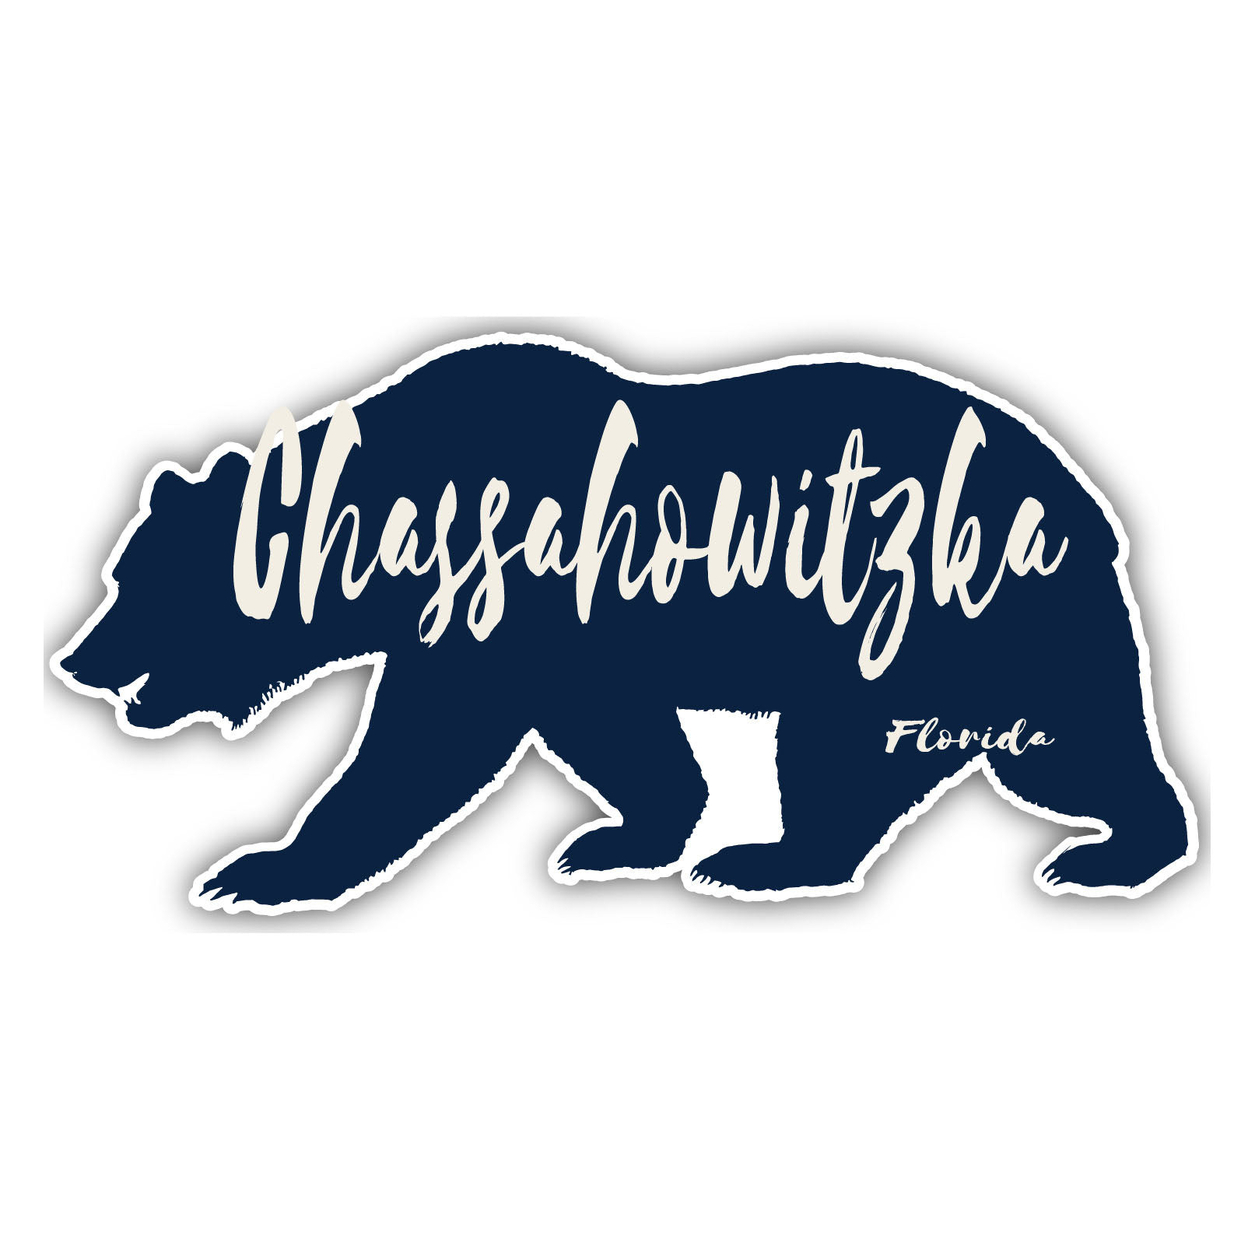 Chassahowitzka Florida Souvenir Decorative Stickers (Choose Theme And Size) - Single Unit, 10-Inch, Bear